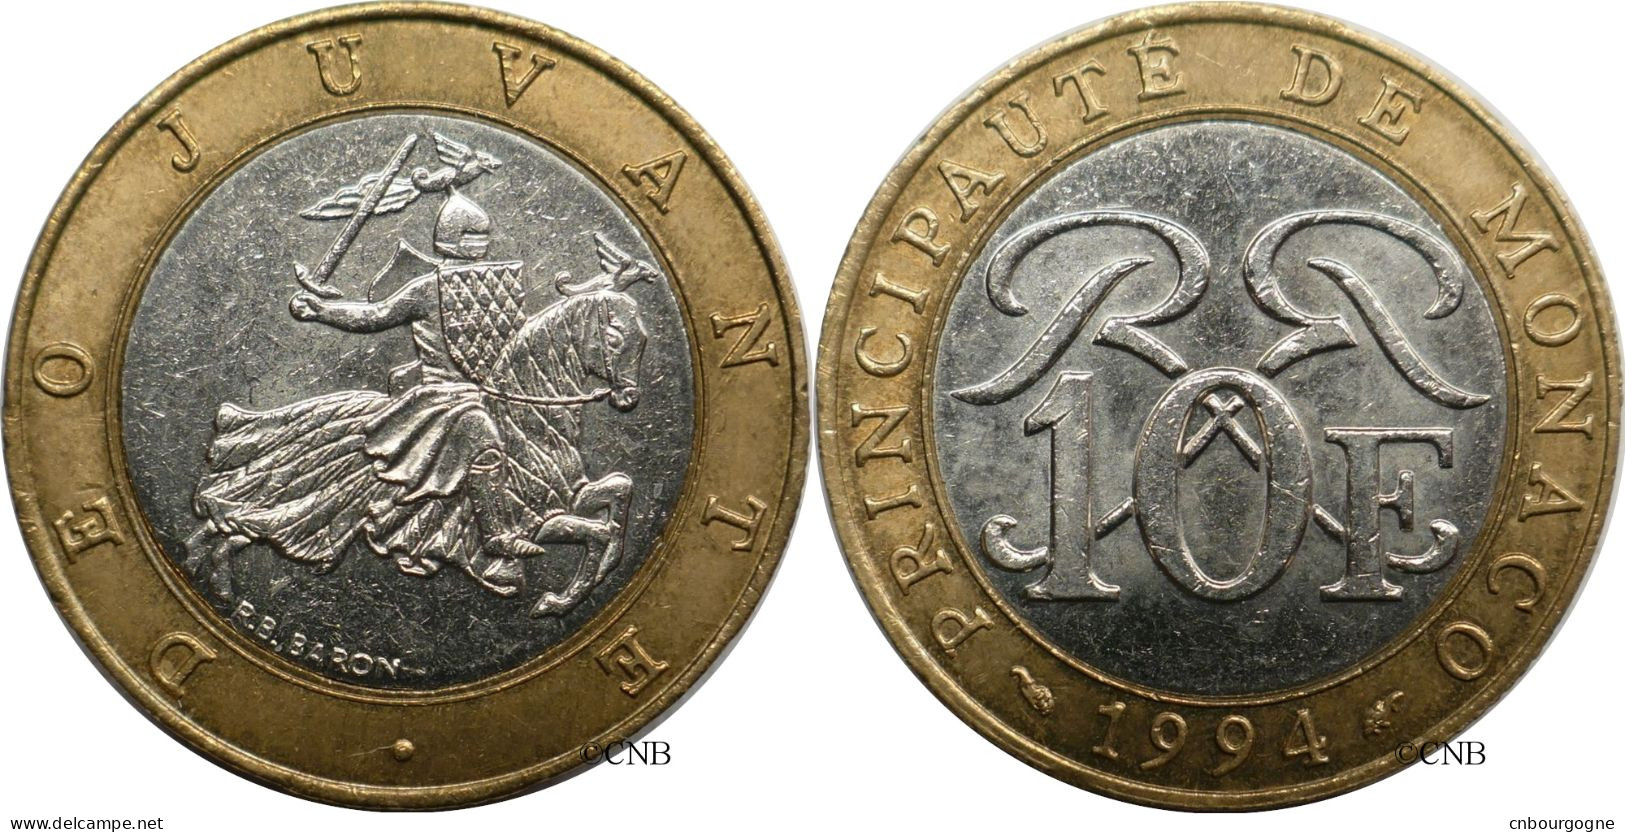 Monaco - Principauté - Rainier III - 10 Francs 1994 - TTB+/AU50 - Mon6663 - 1960-2001 Francos Nuevos